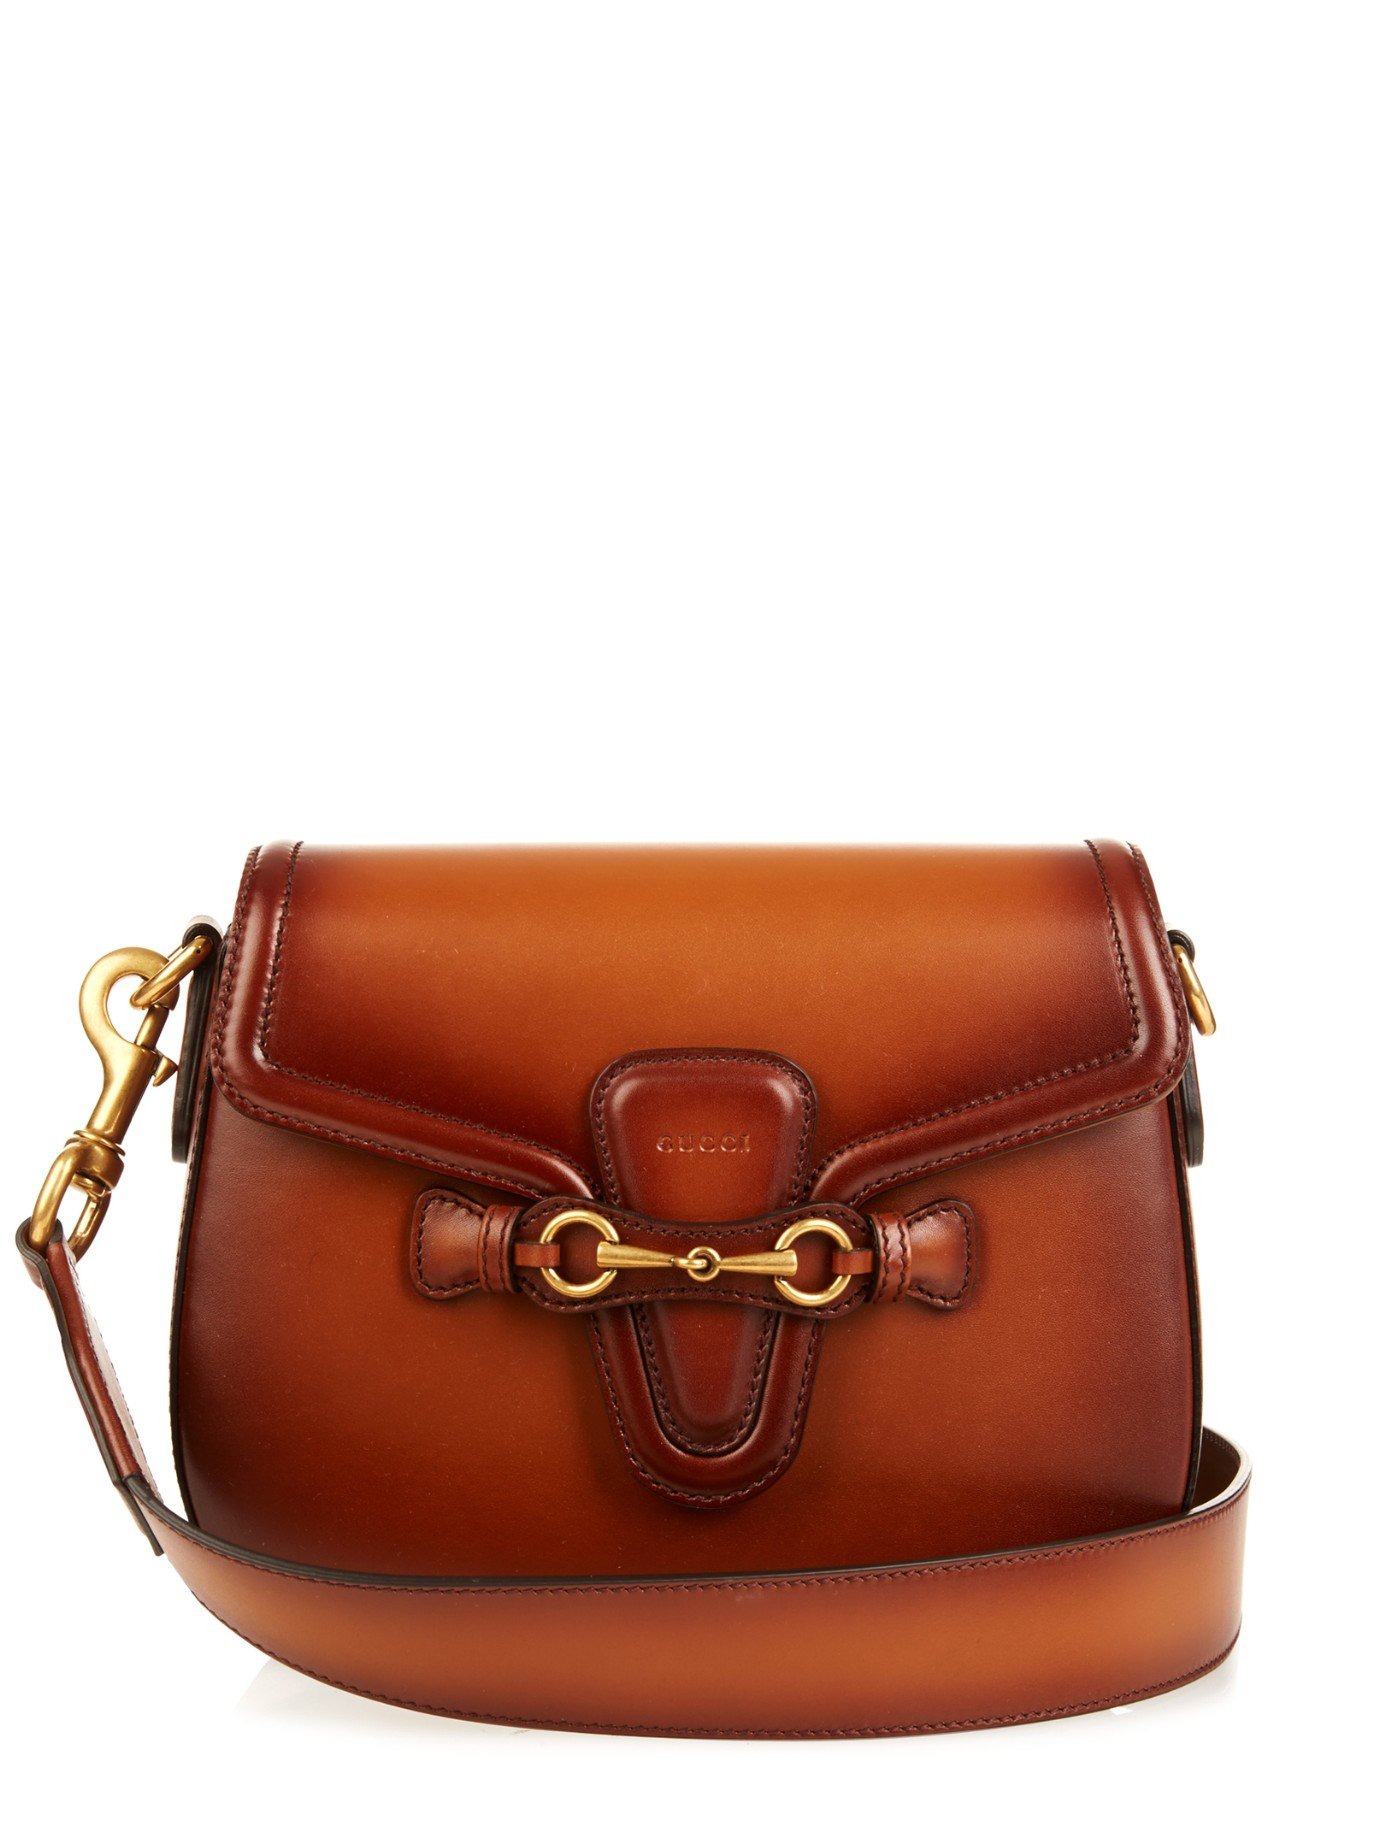 Gucci Lady Web Medium Leather Shoulder Bag in Brown | Lyst